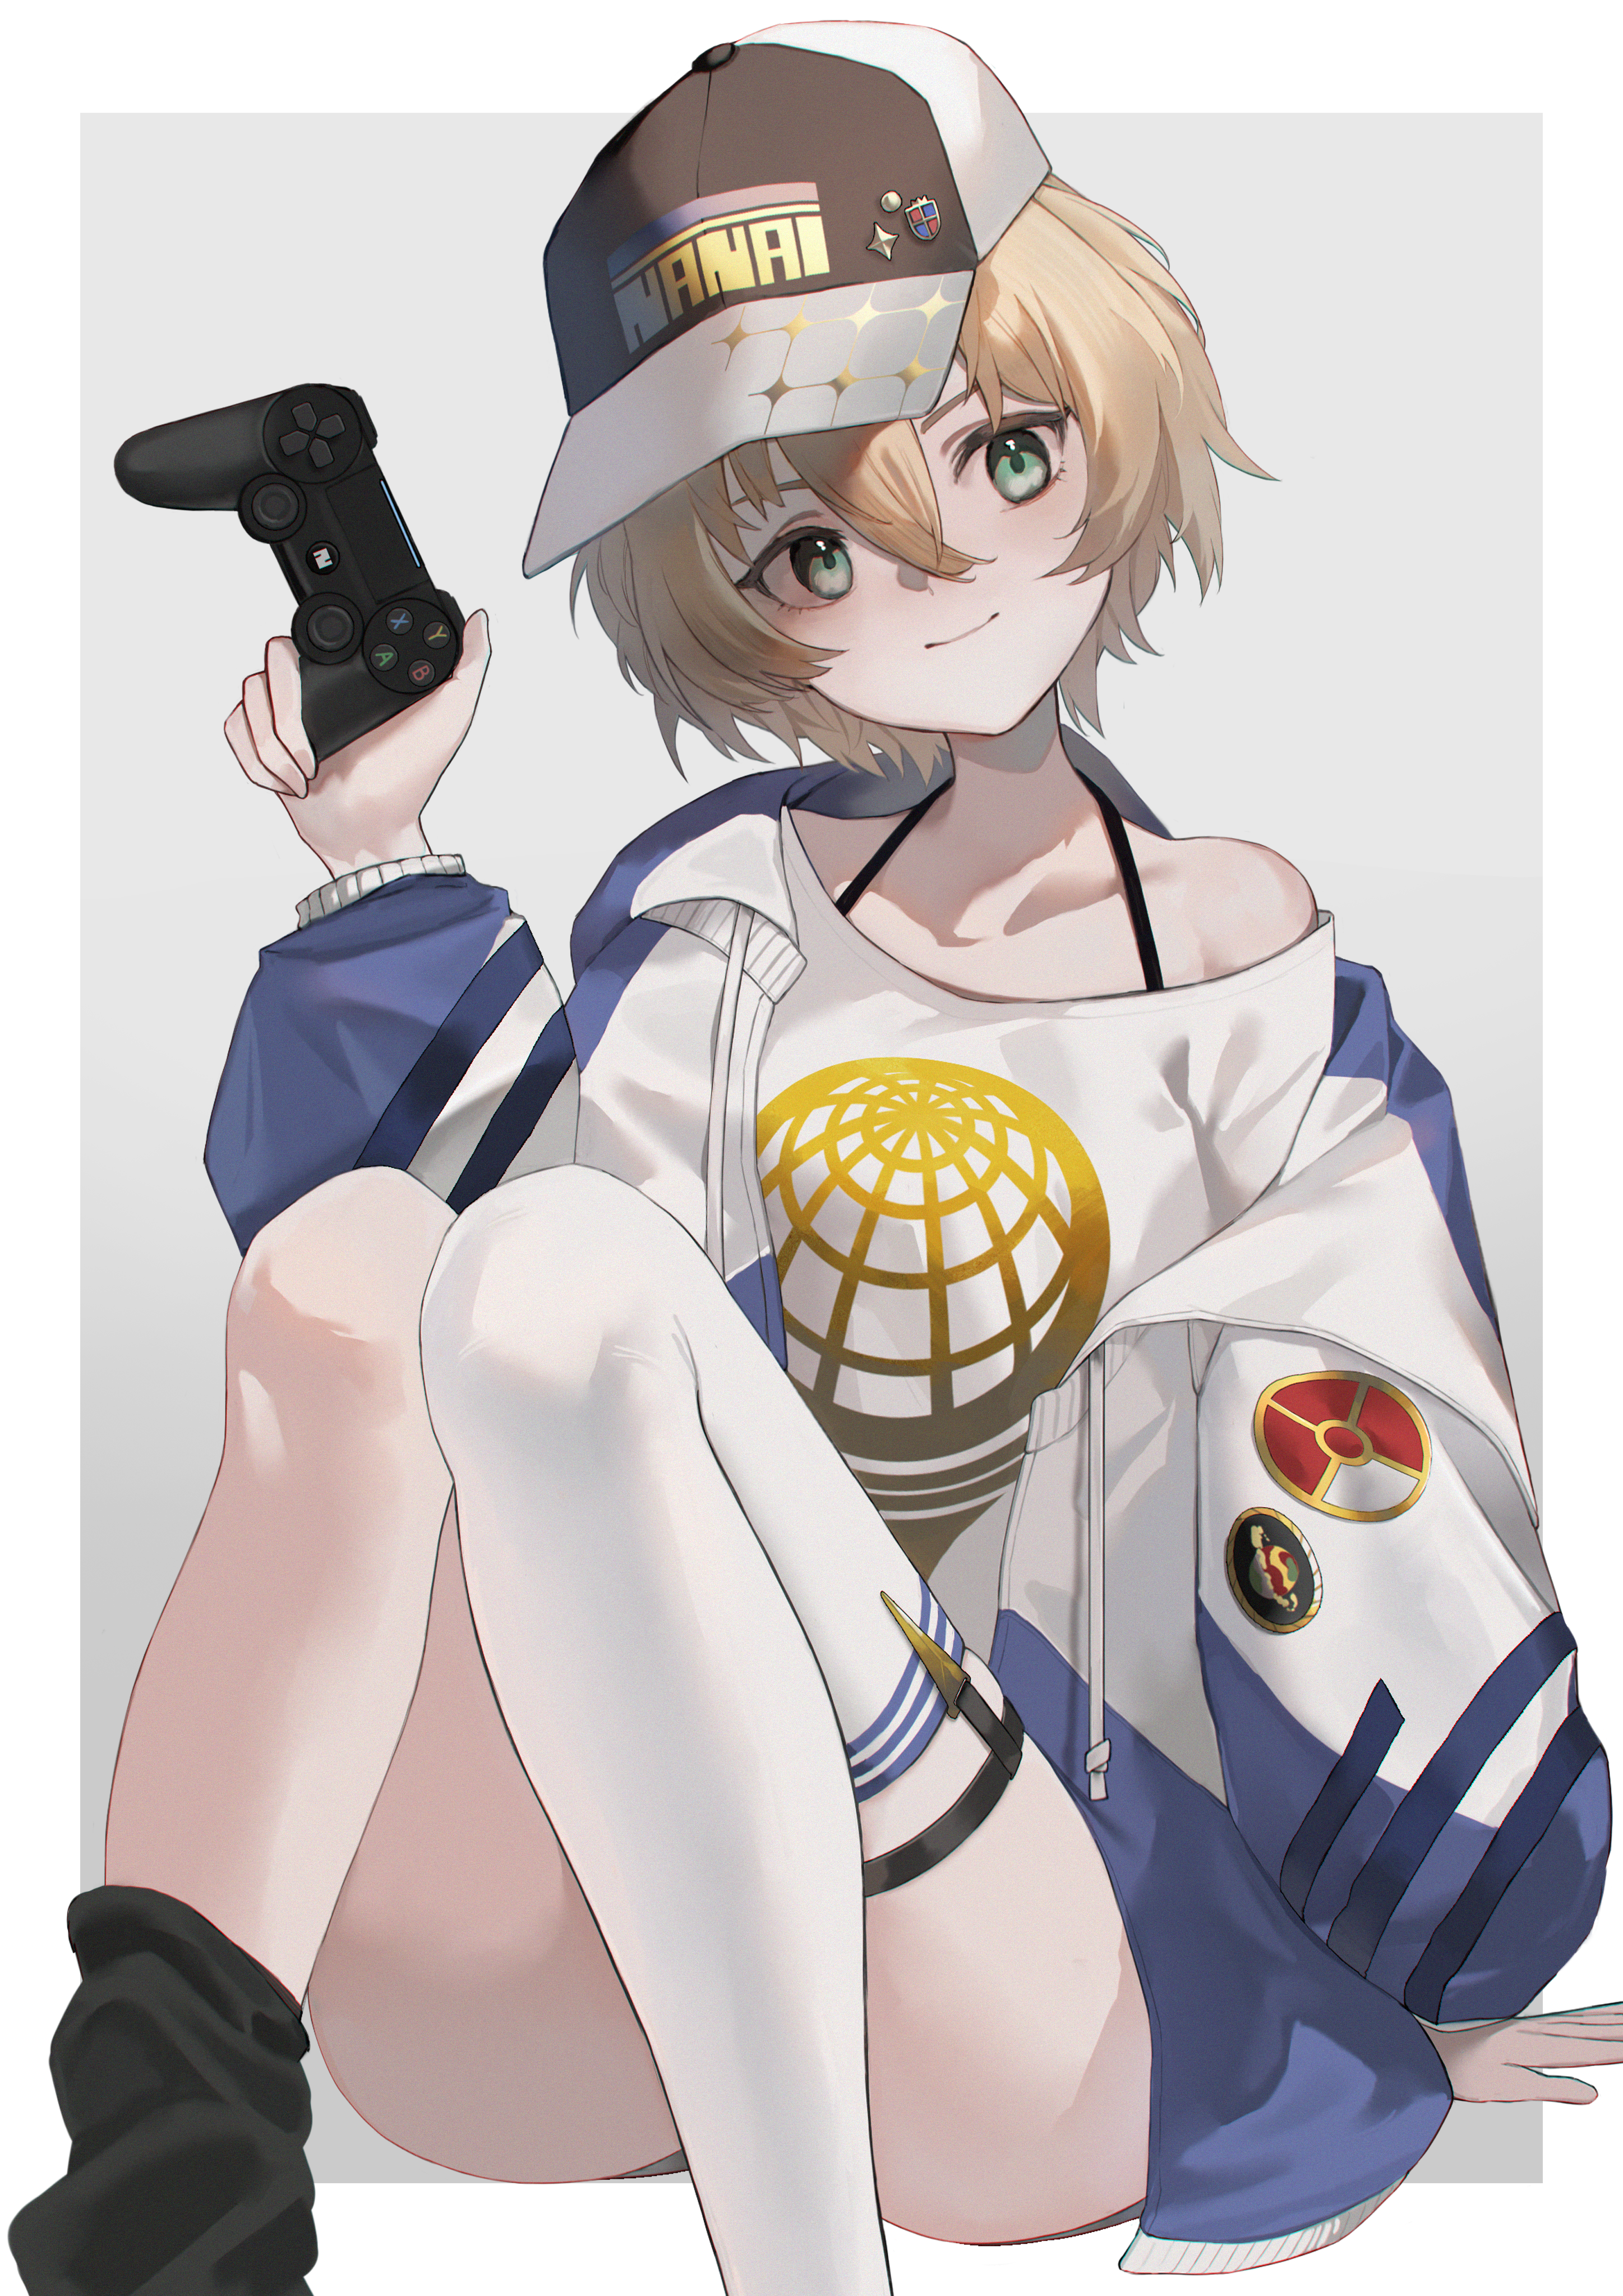 2D Anime Anime Girls Digital Art Digital Hat Blue Jacket White Jacket Looking At Viewer Thigh High S 2894x4093